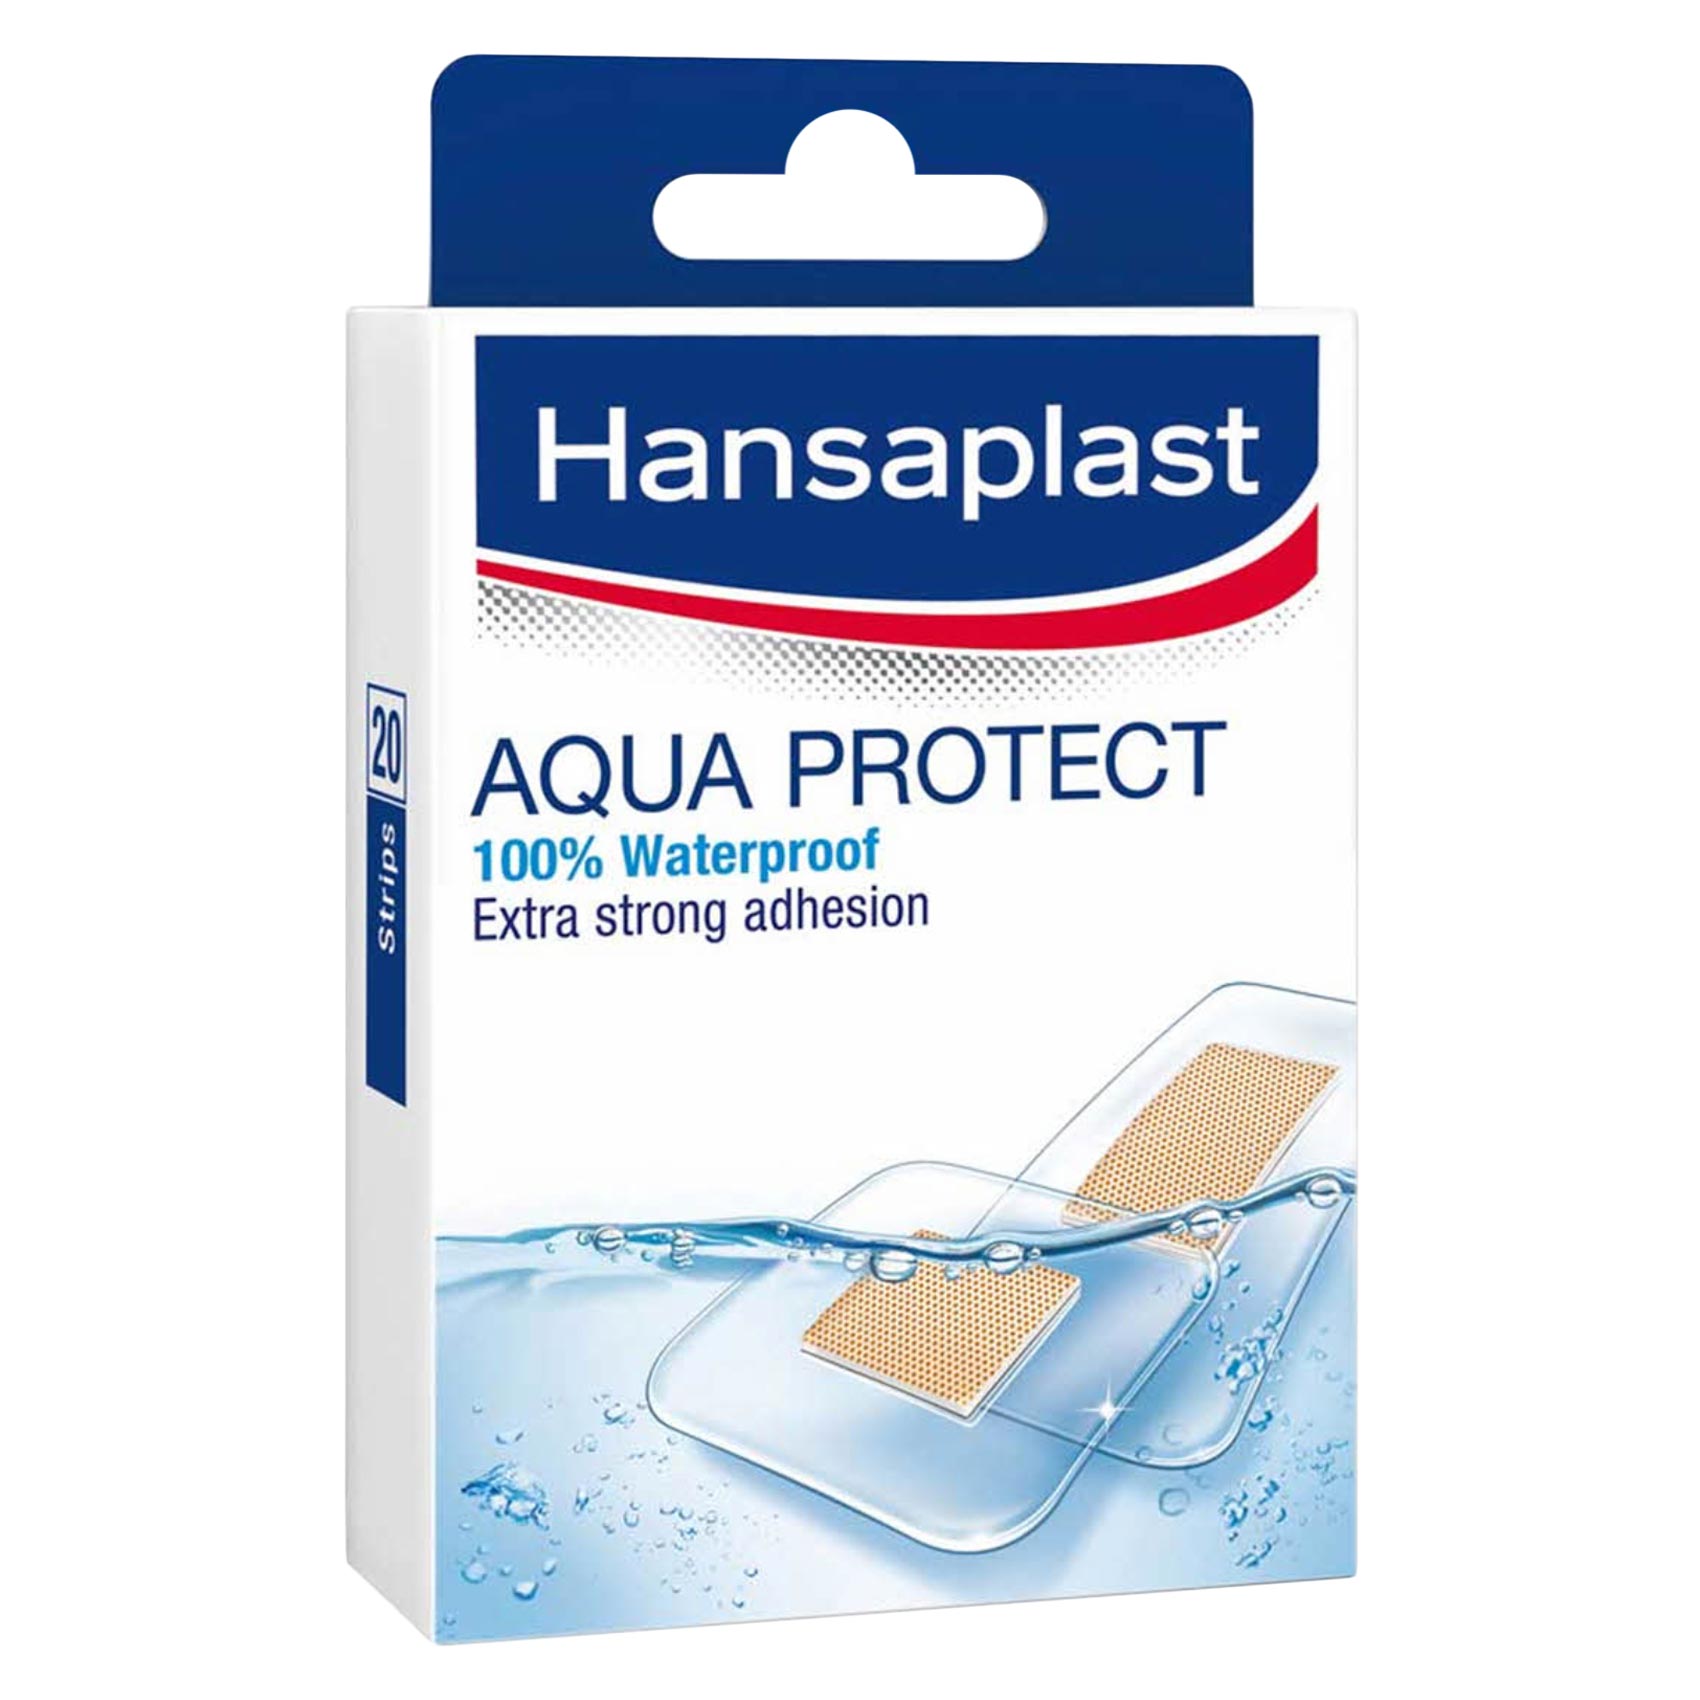 Hansaplast Aqua Protect Waterproof Adhesion Strips 20 Pieces